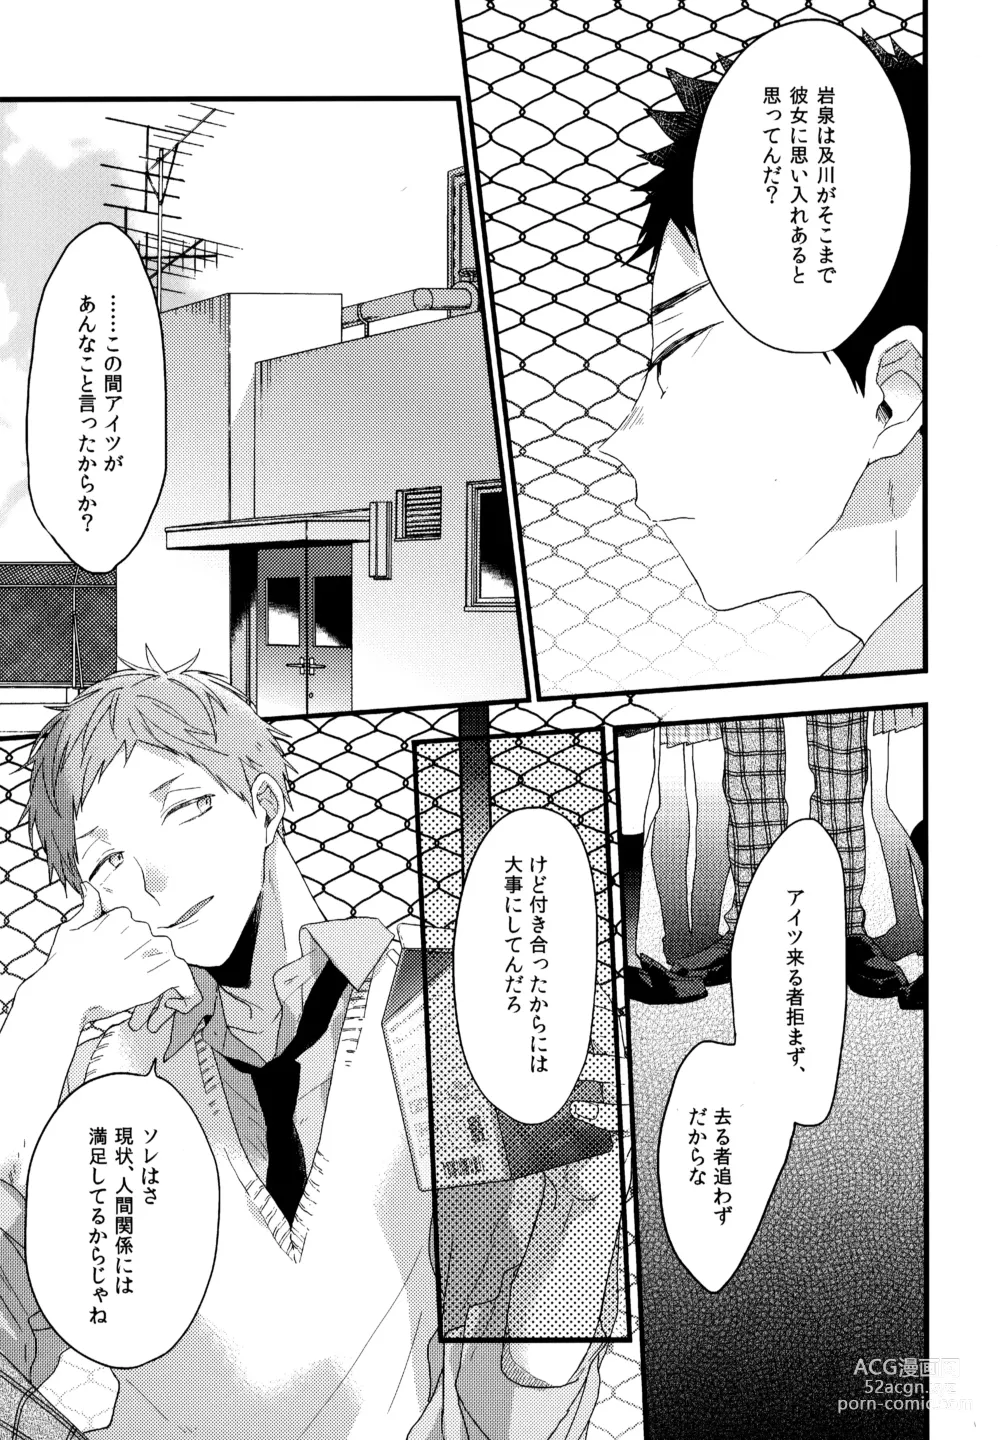 Page 14 of doujinshi Uchidome OiIwa Sairoku 2